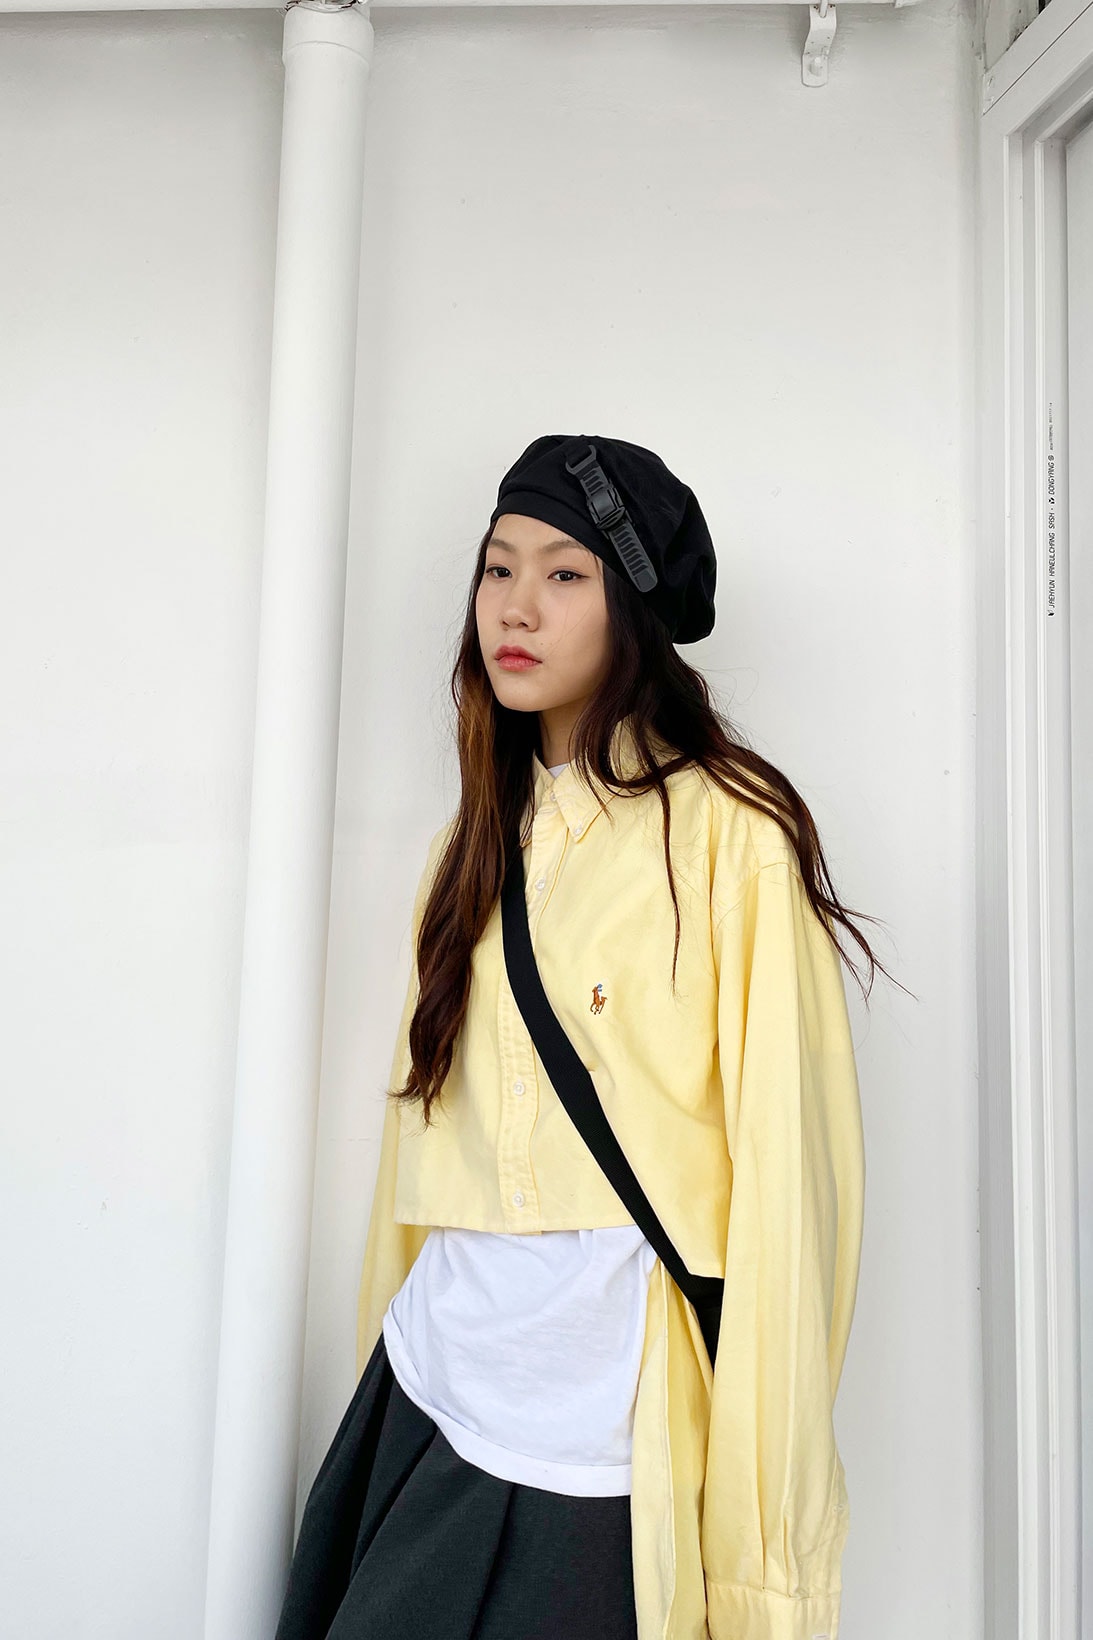 jung hayoung korean model upcycling sustainable fashion polo shirt yellow beret